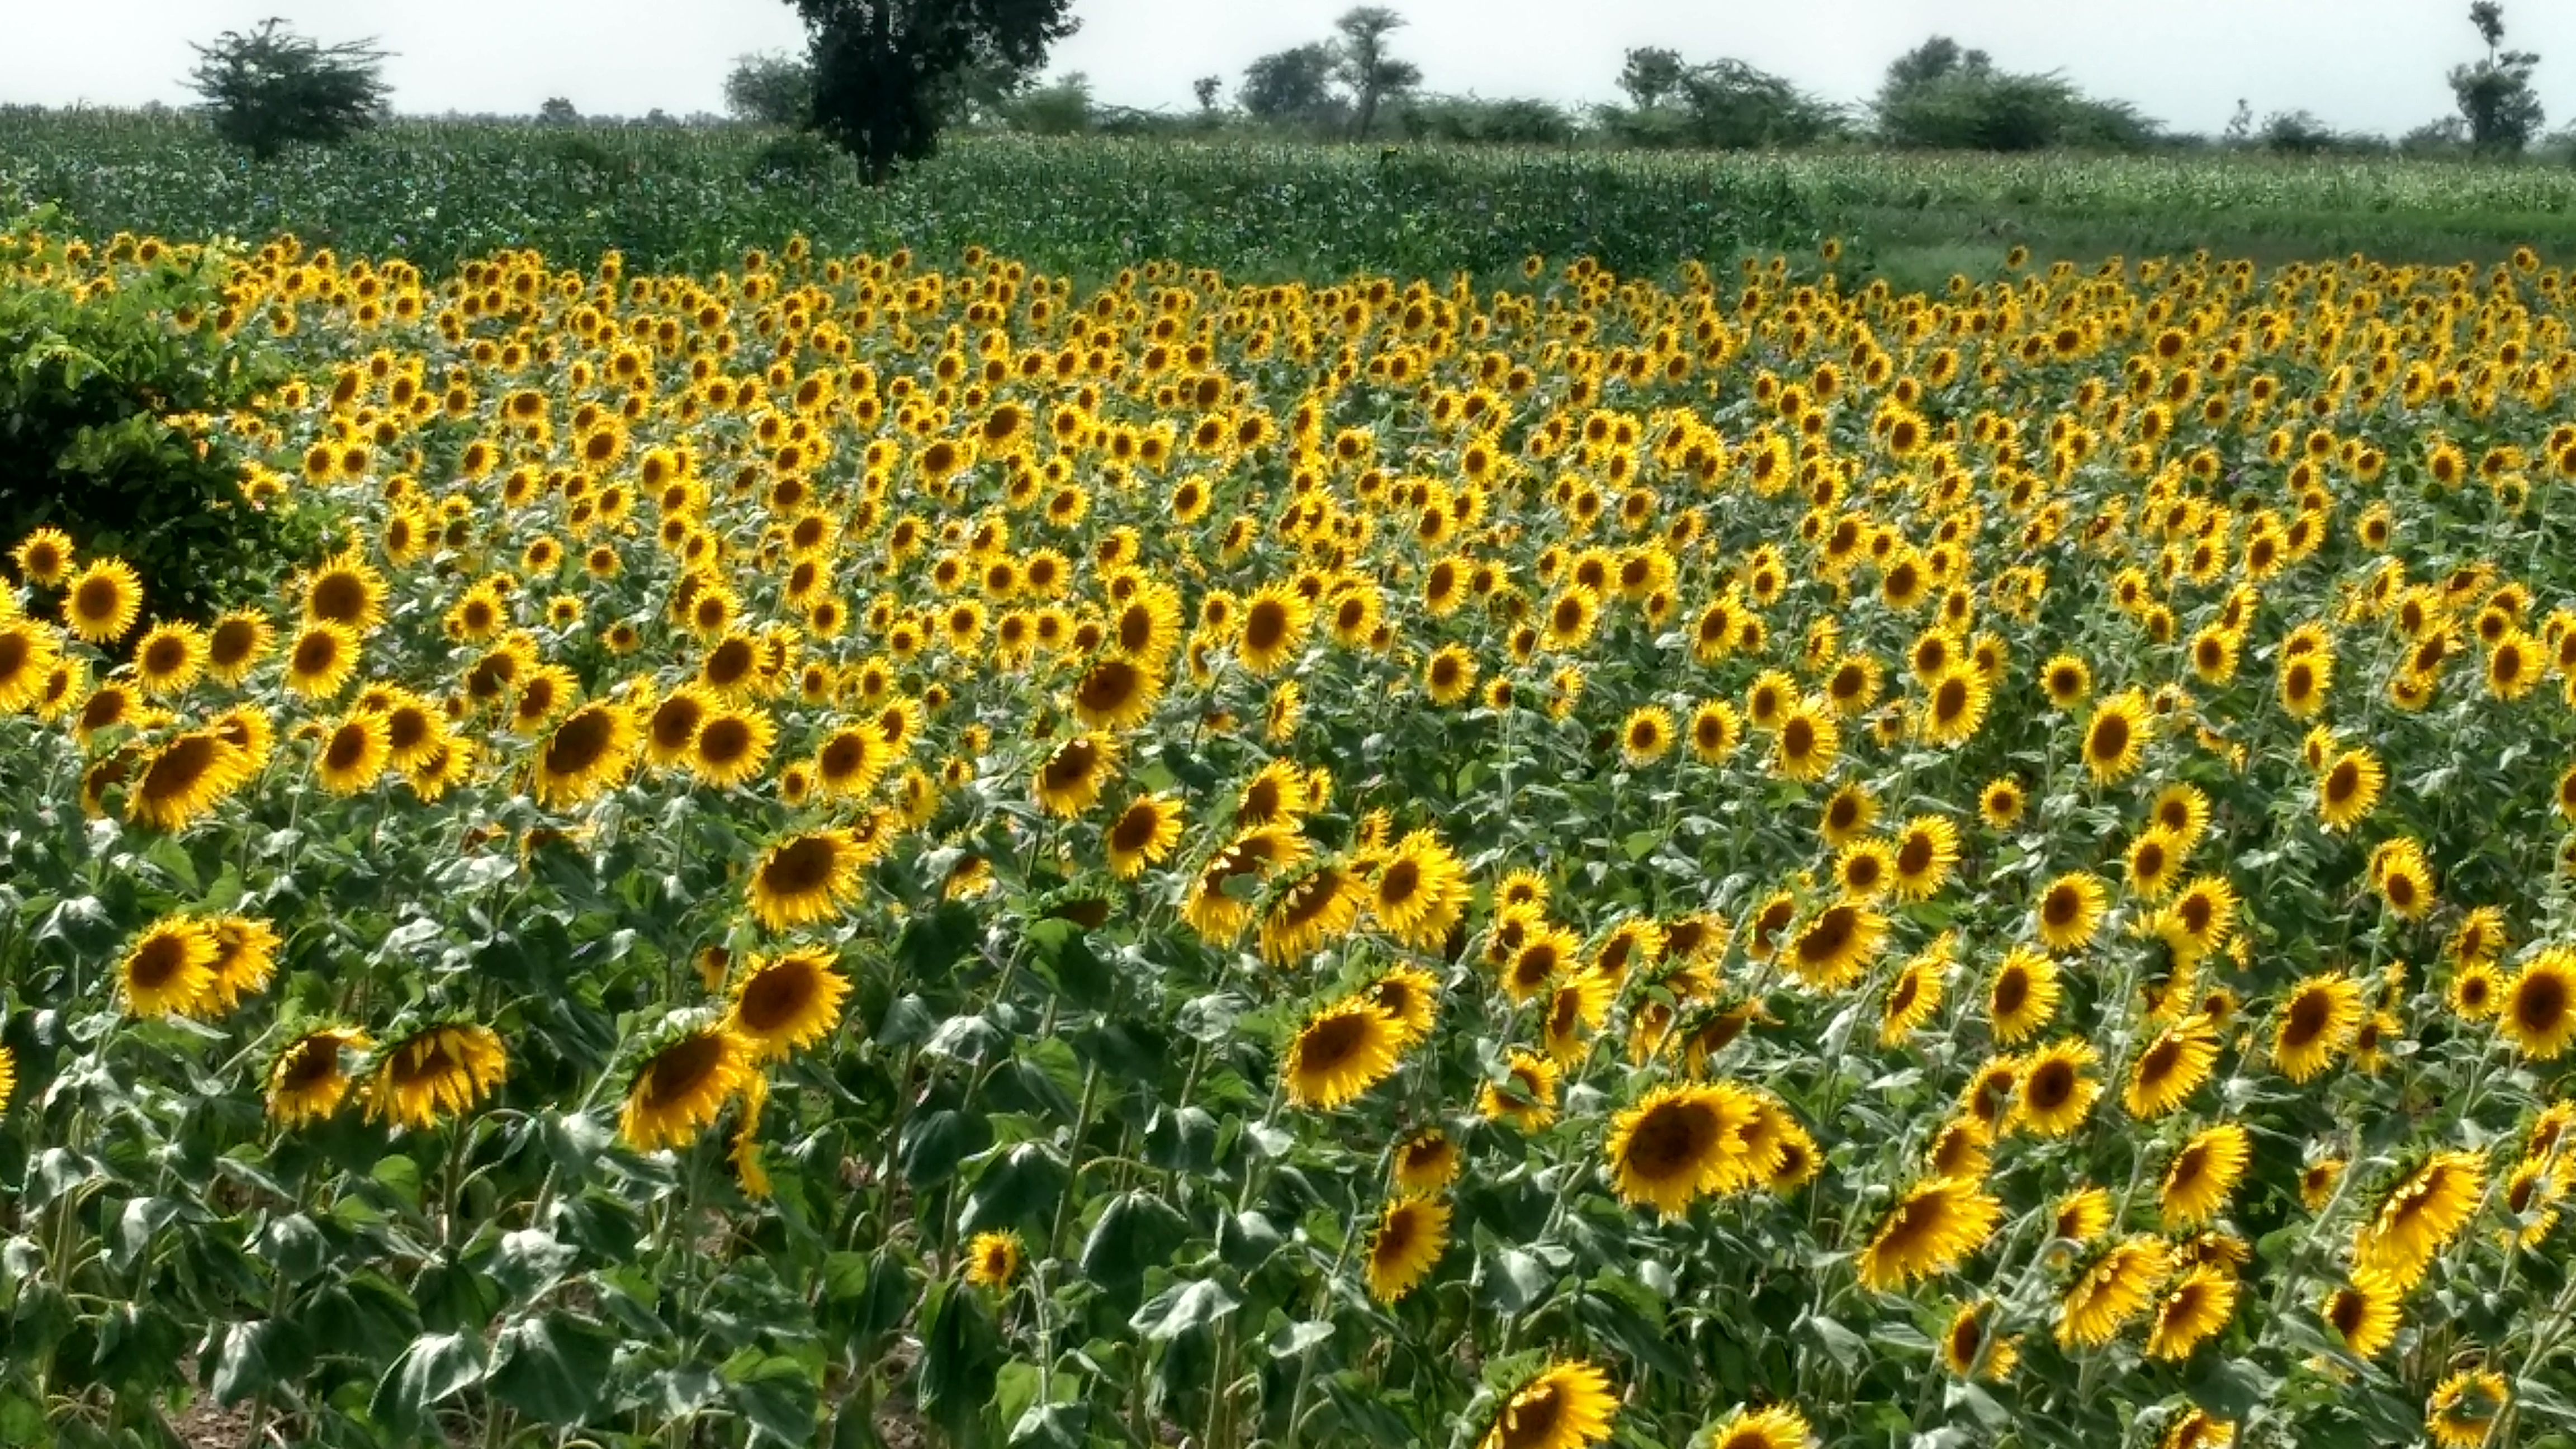 File:SunflowerField.jpg - Wikimedia Commons